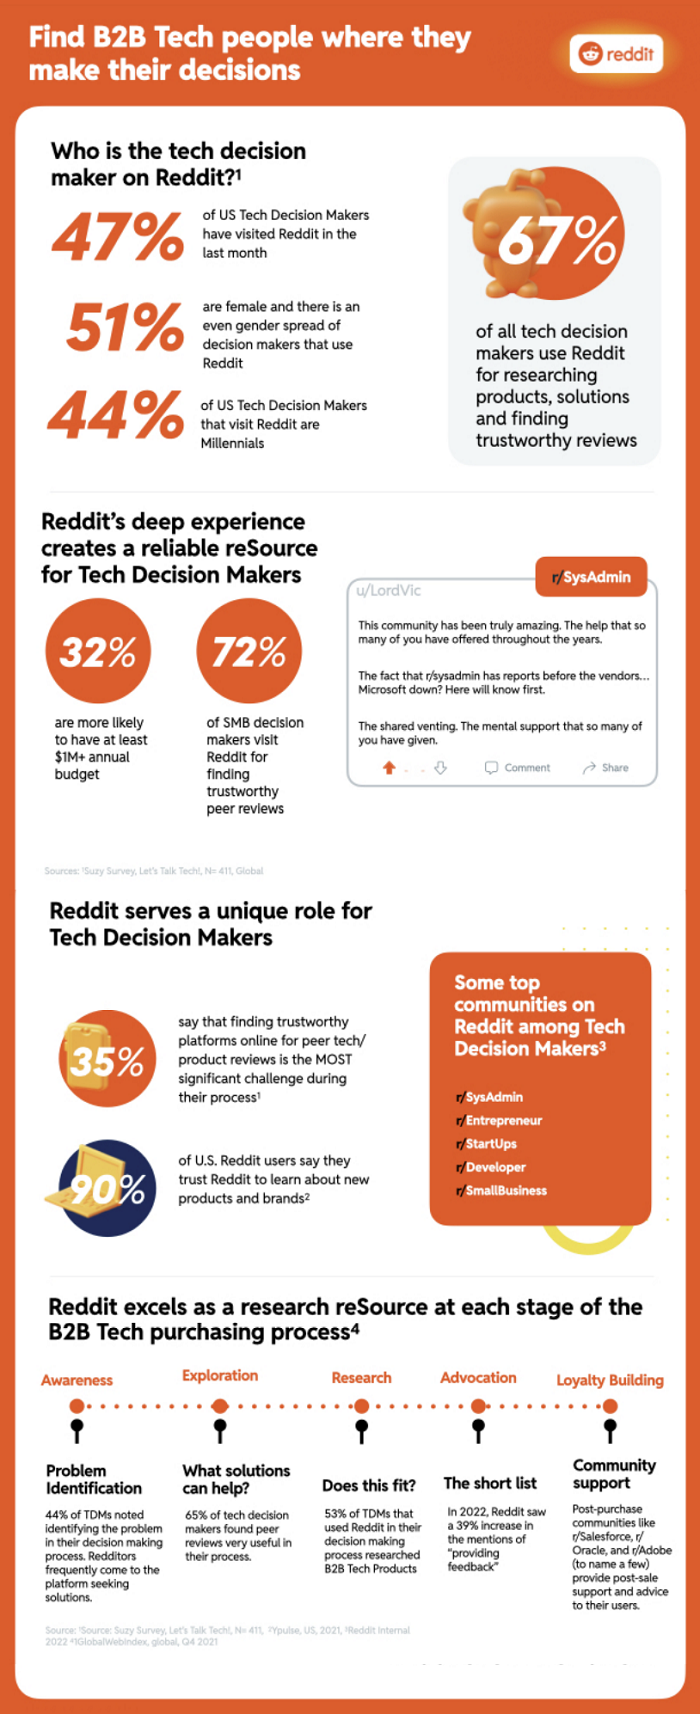 Reddit Tech Decision Makers infographic